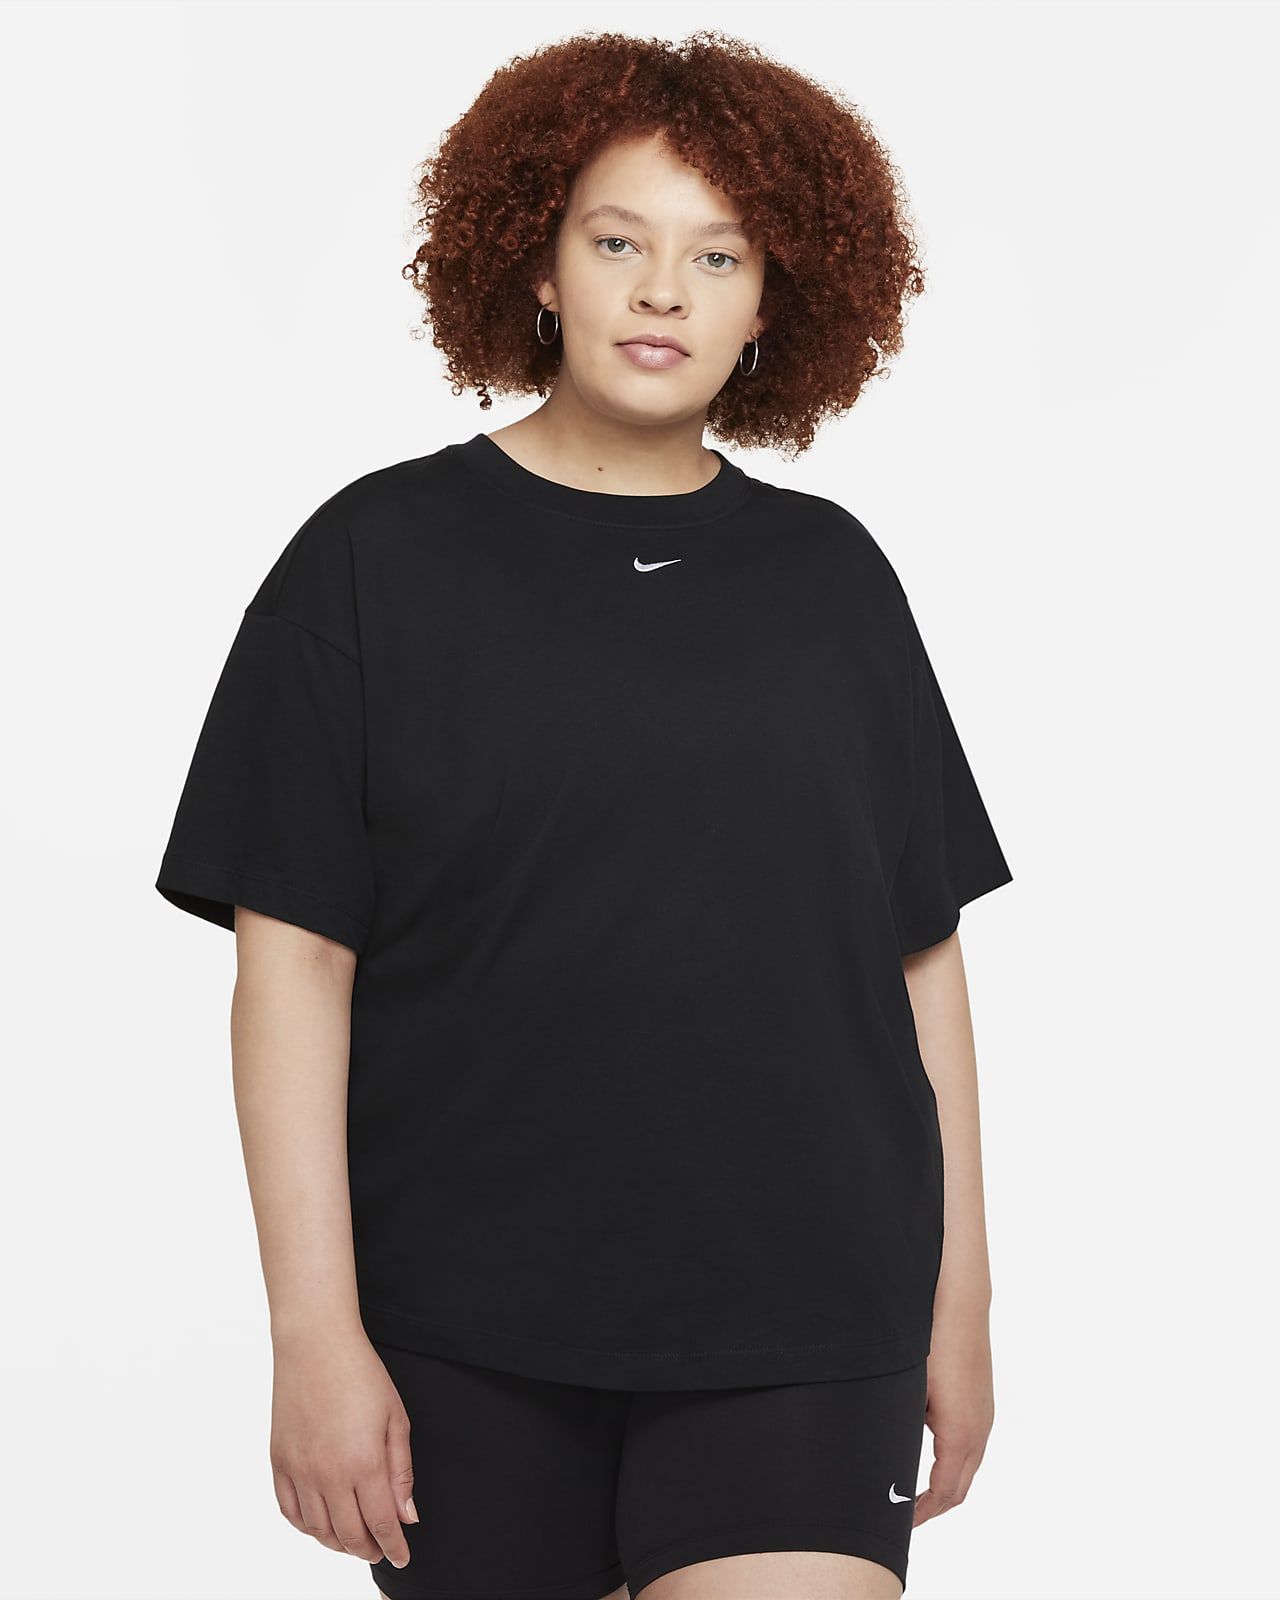 Women's Oversized Short-Sleeve Top (Plus Size) | Nike (US)